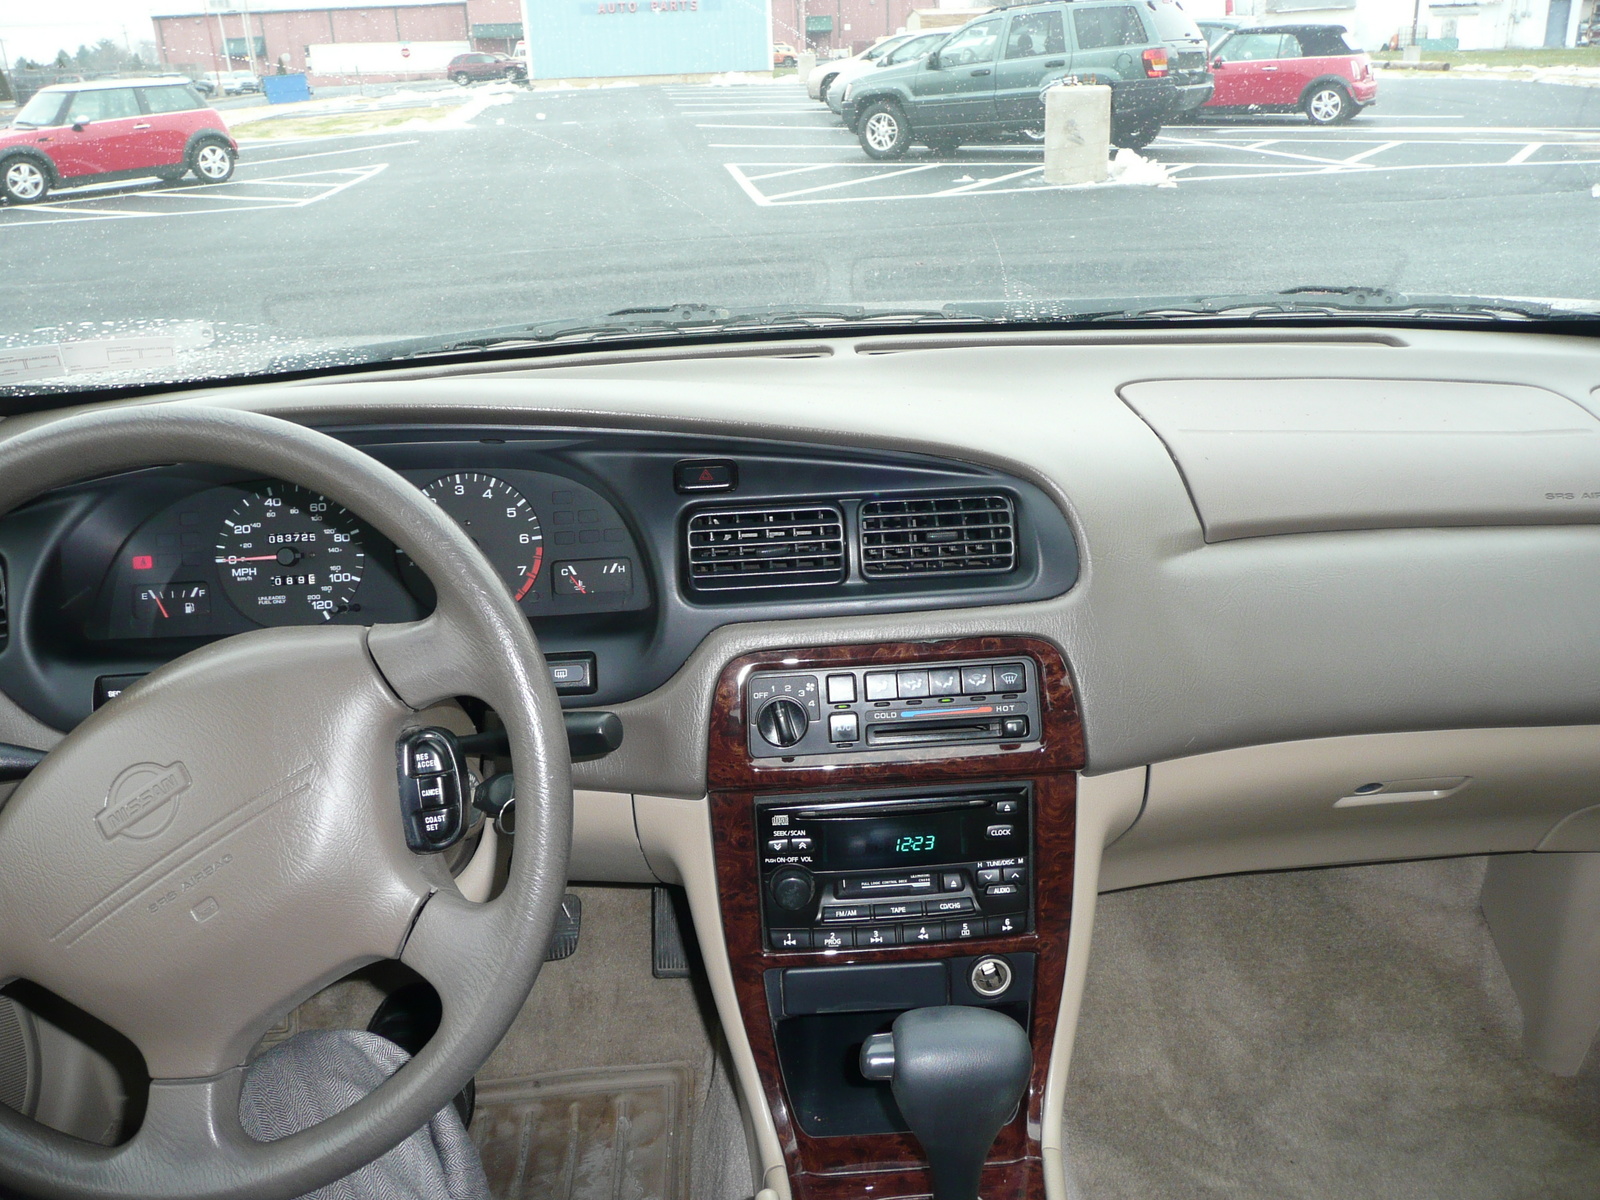 1999 Nissan altima interior photos